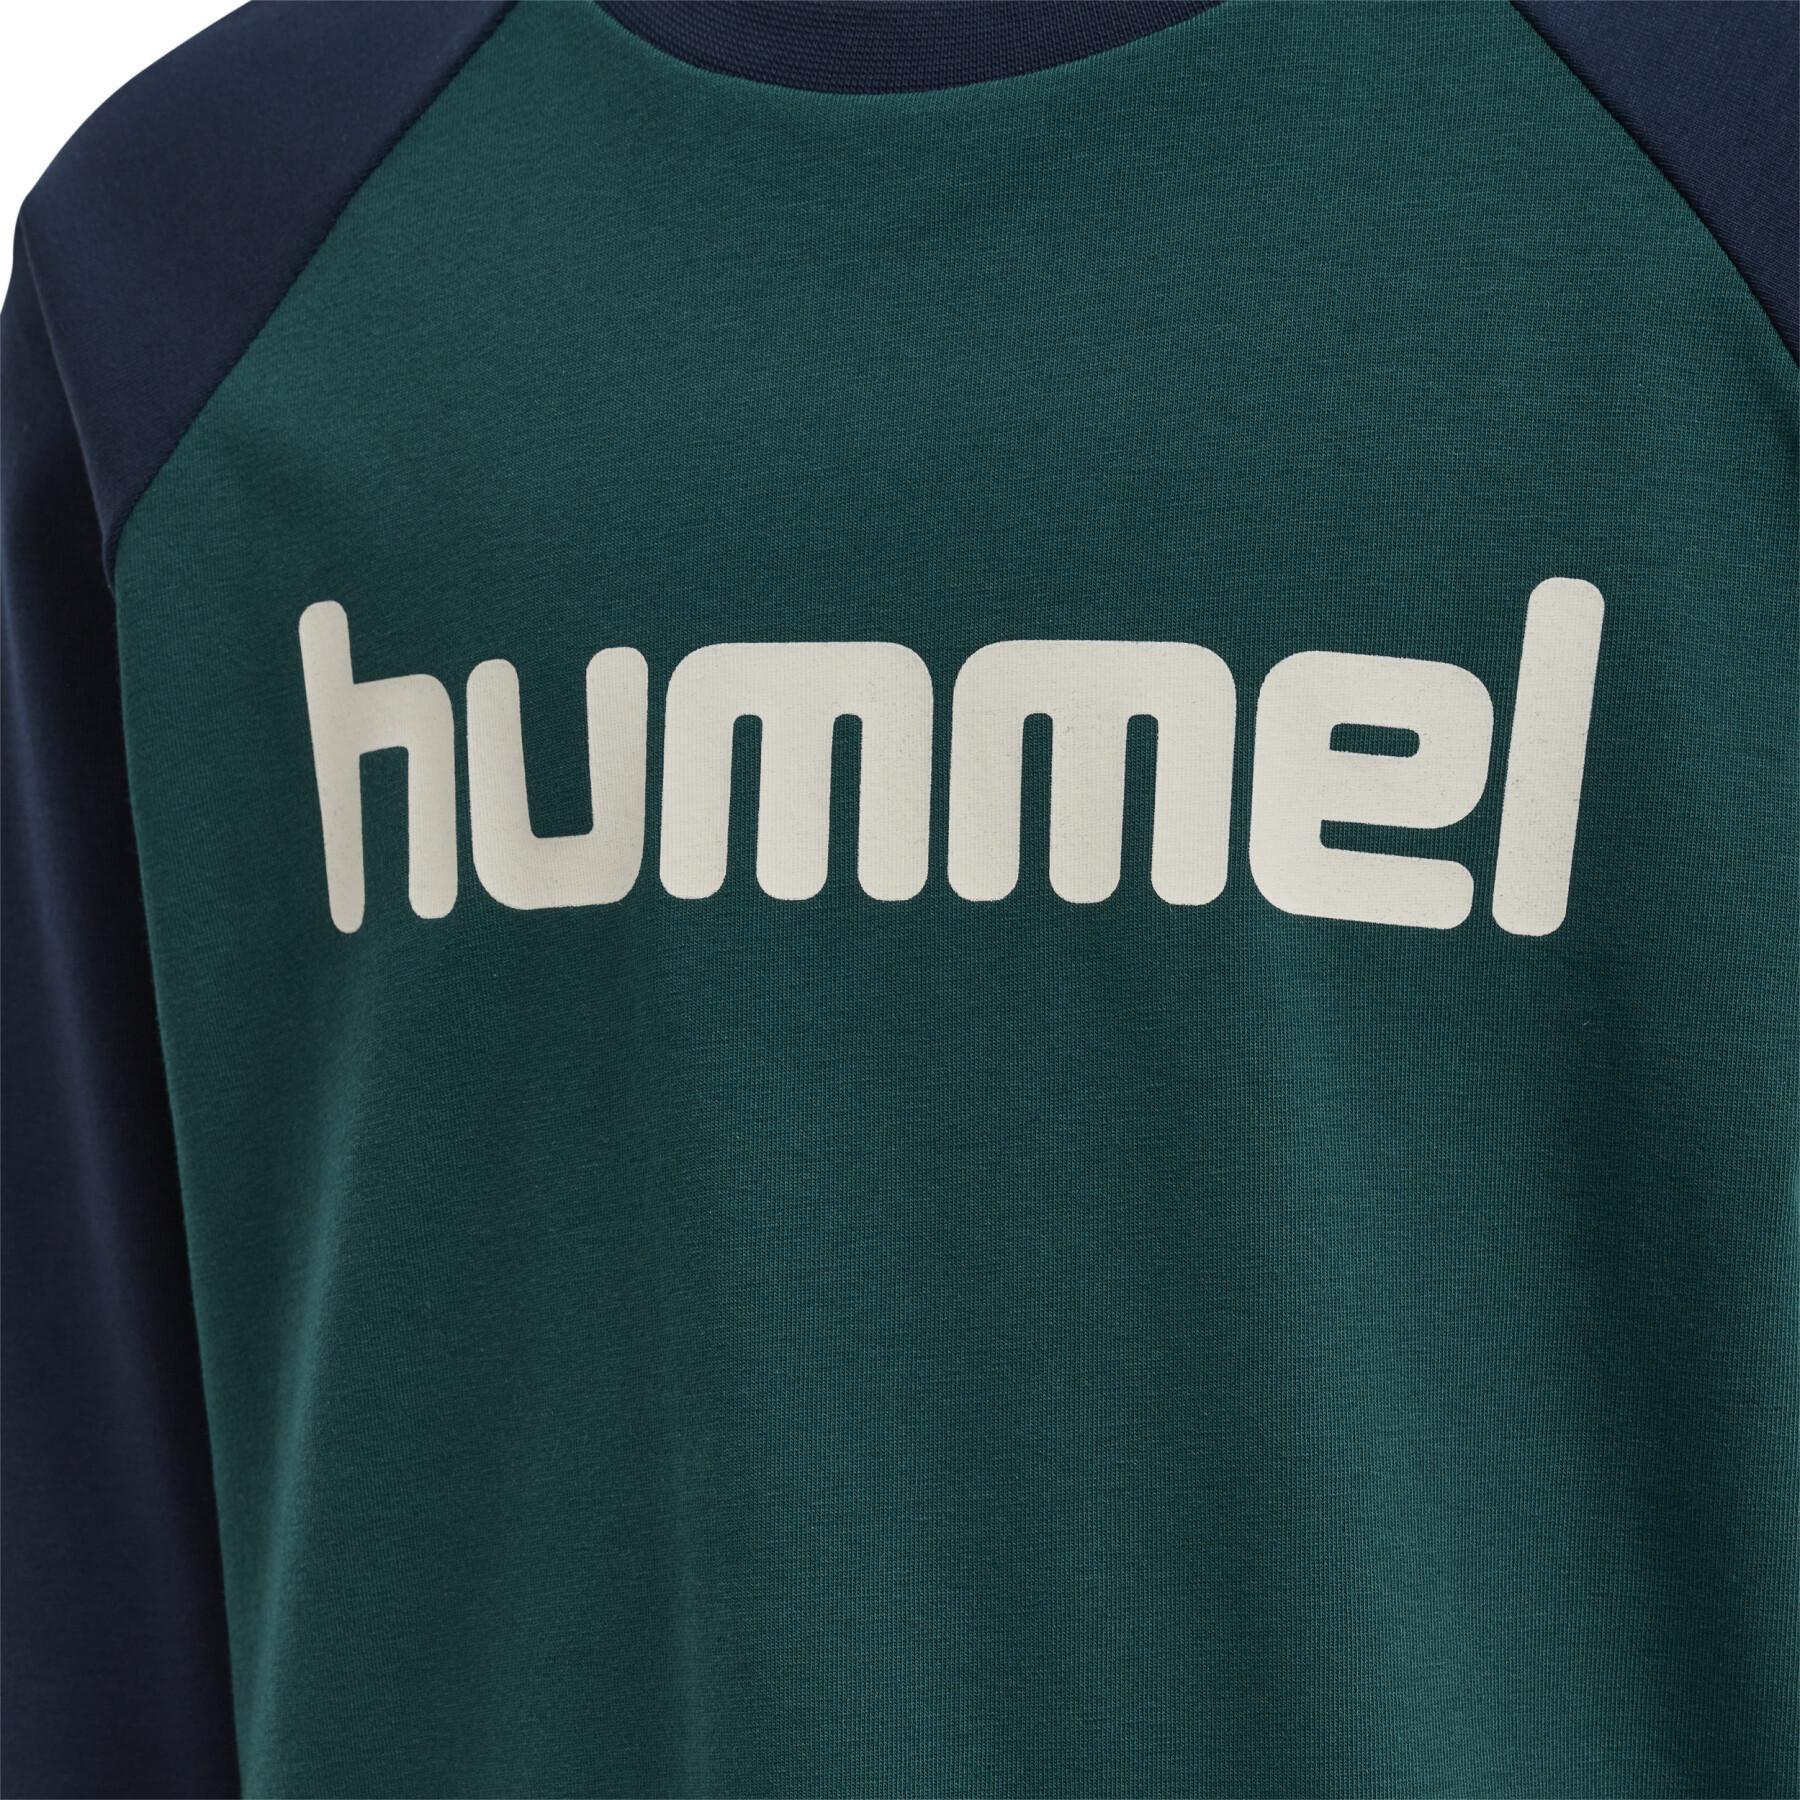 Camiseta de manga larga para niños Hummel